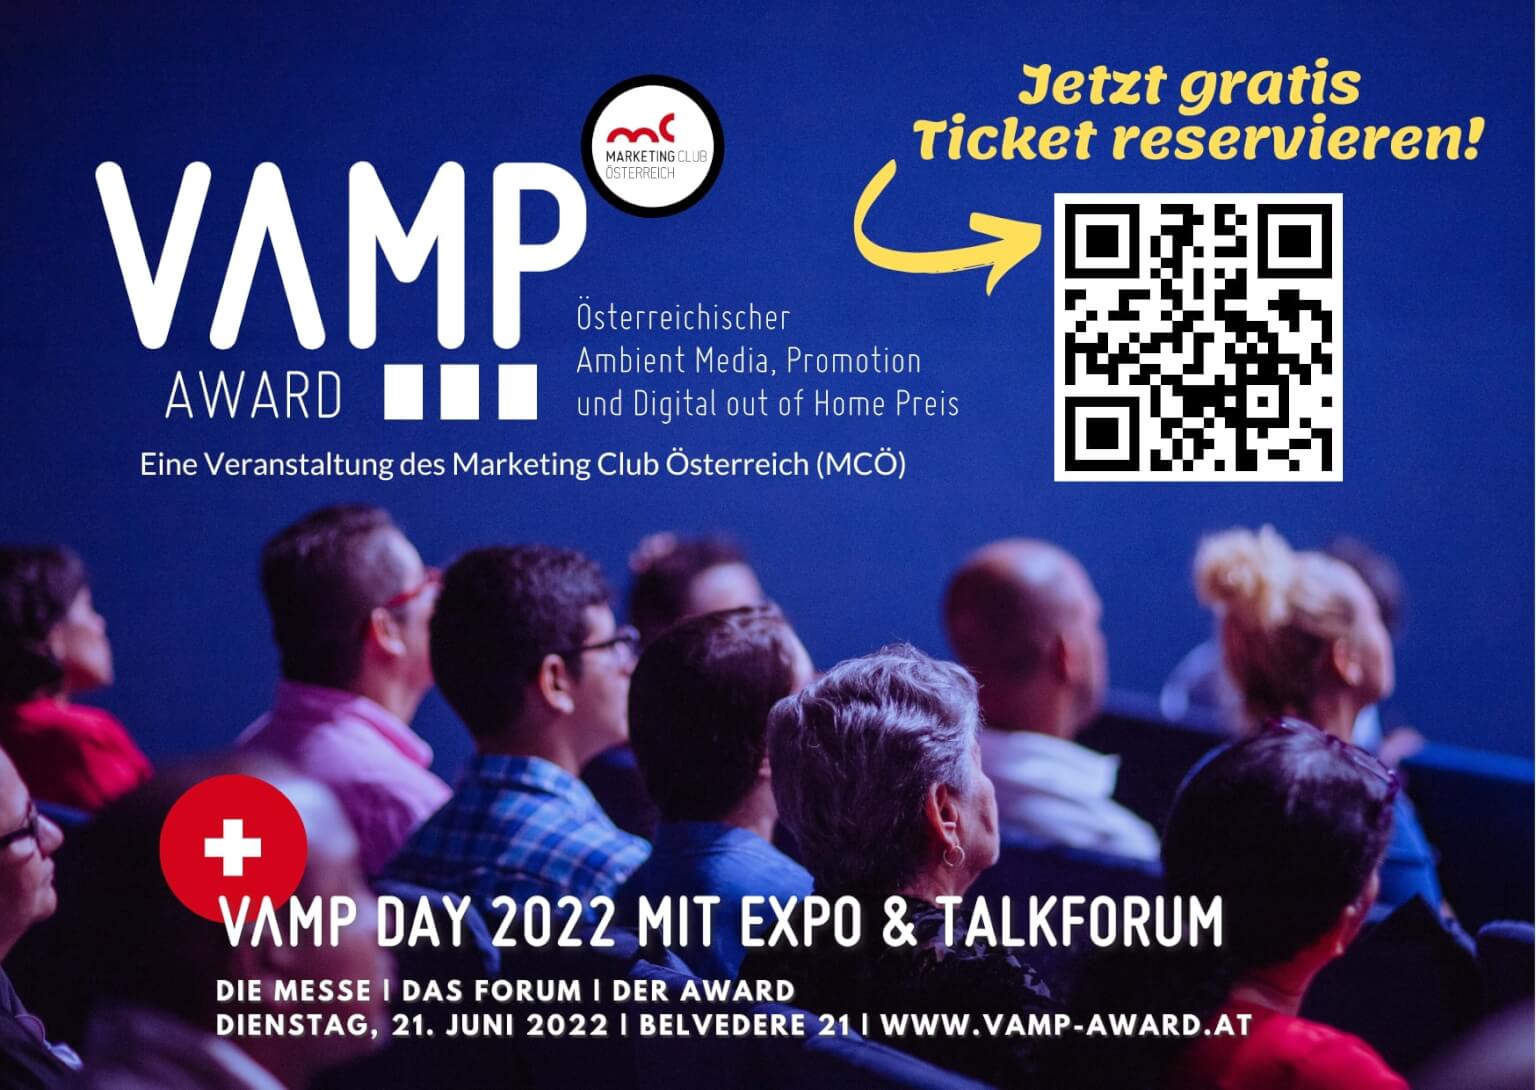 VAMP Day 2022 & Vamp Award 2022